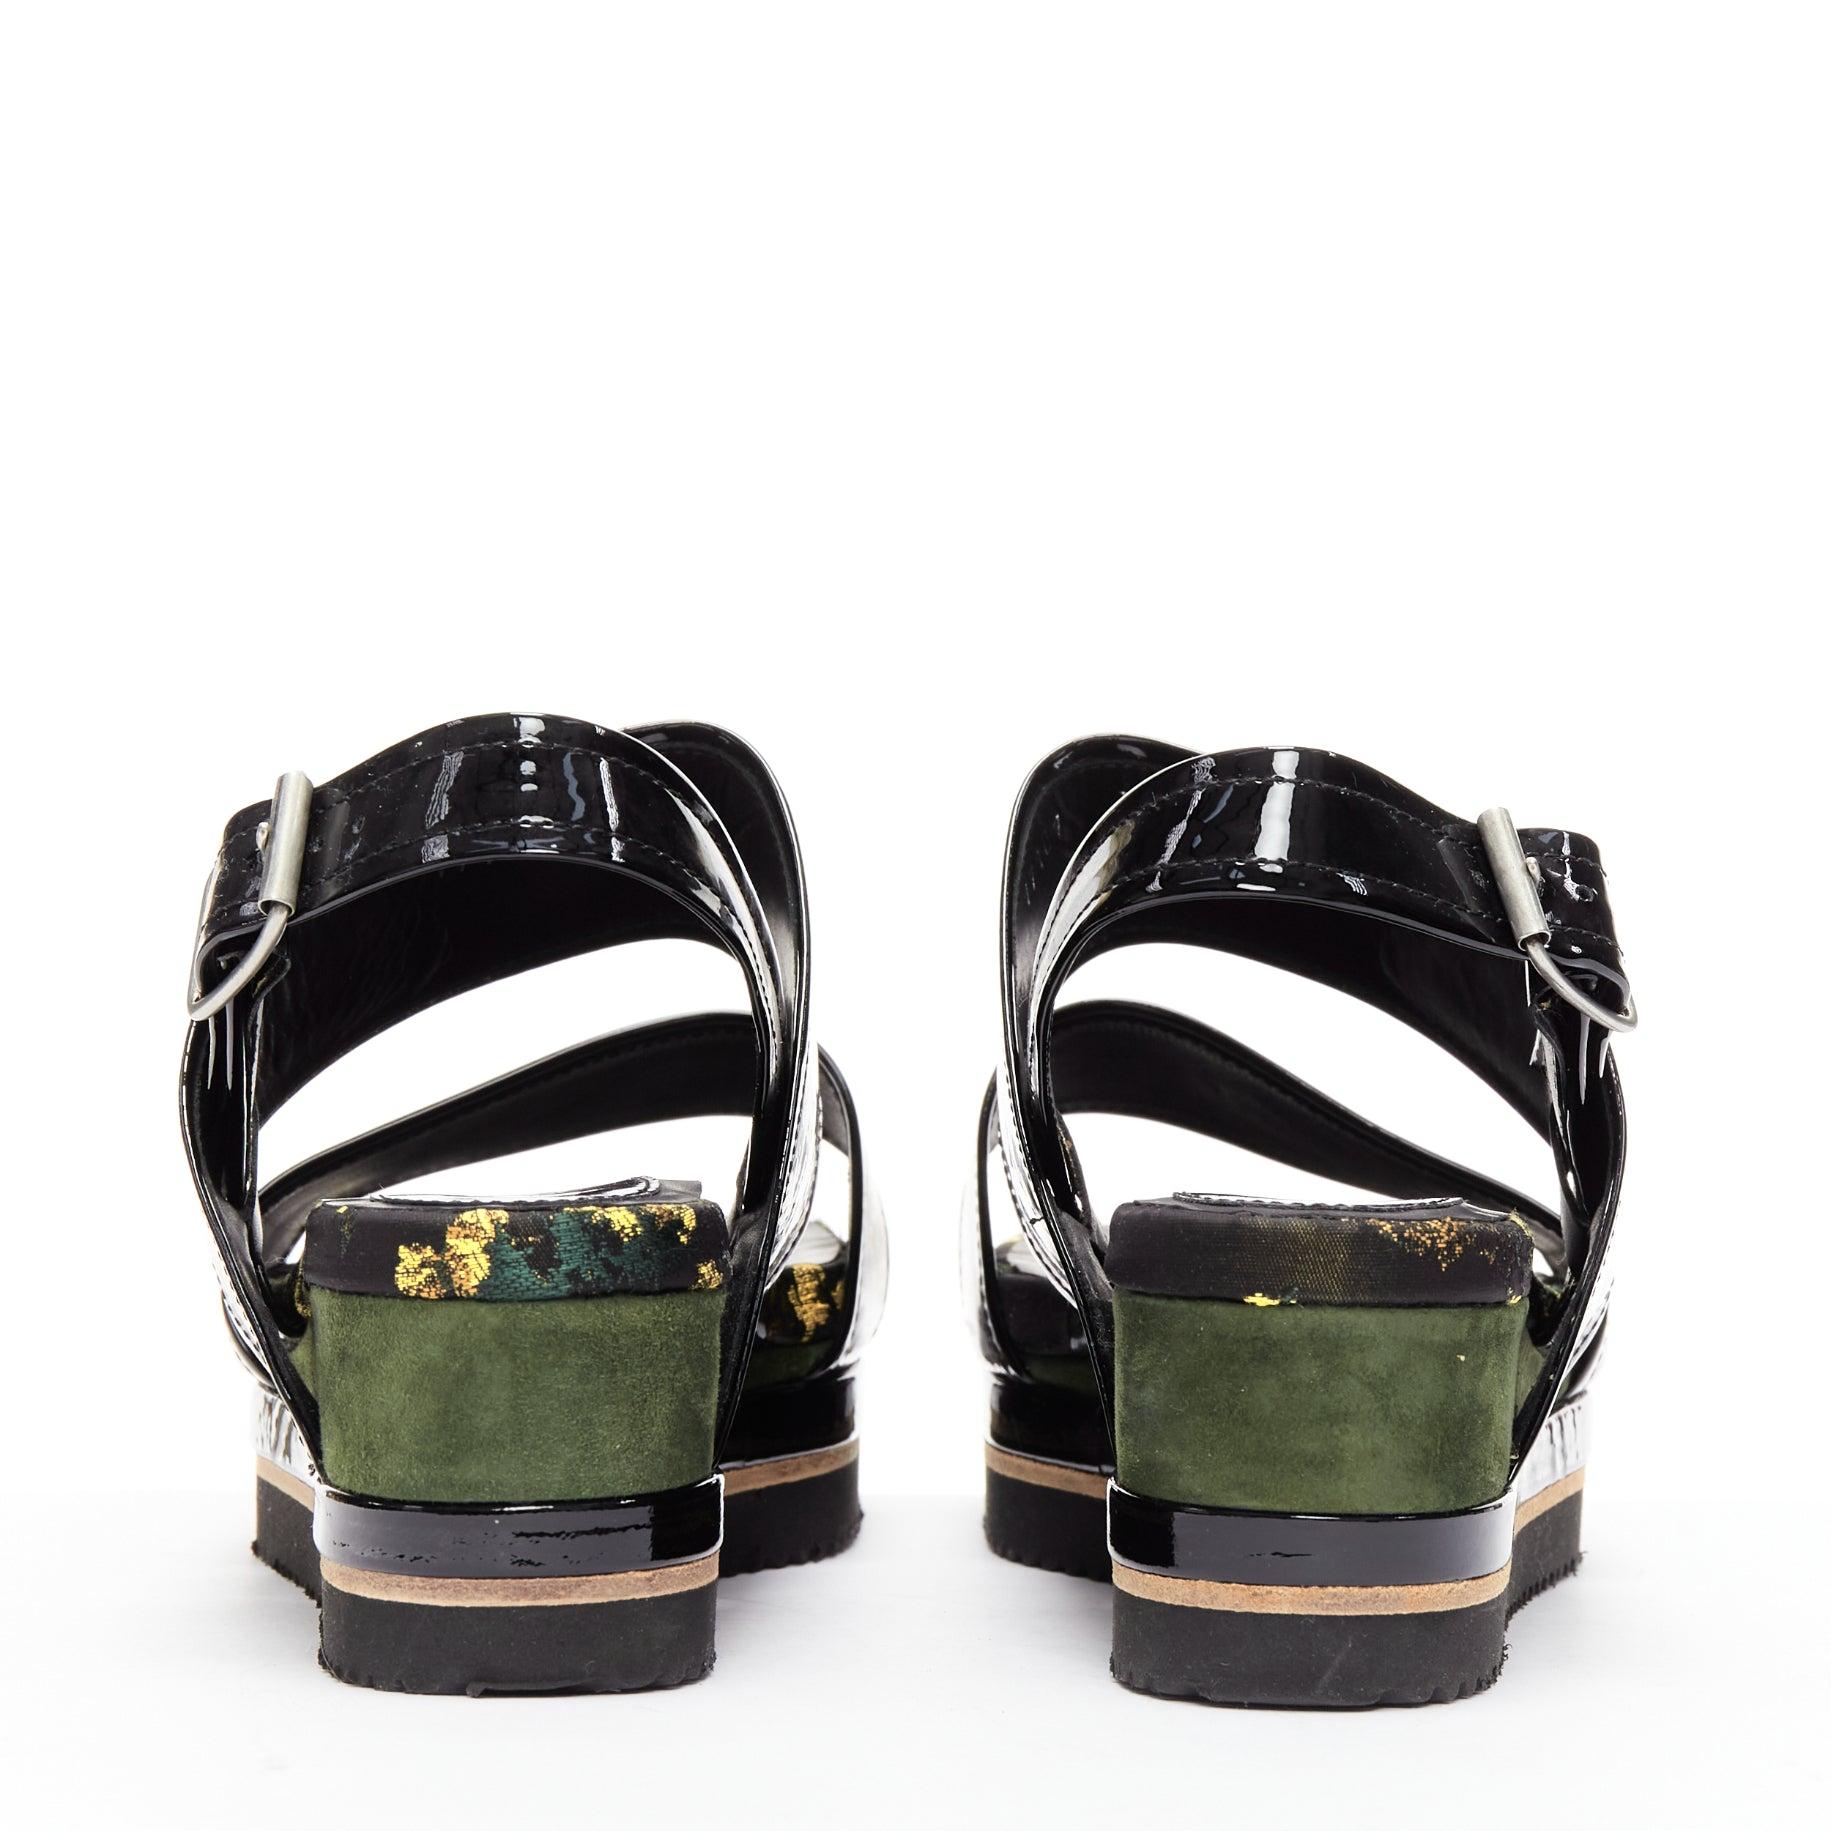 DRIES VAN NOTEN balck patent floral broade green suede platform sandal EU36.5 For Sale 1